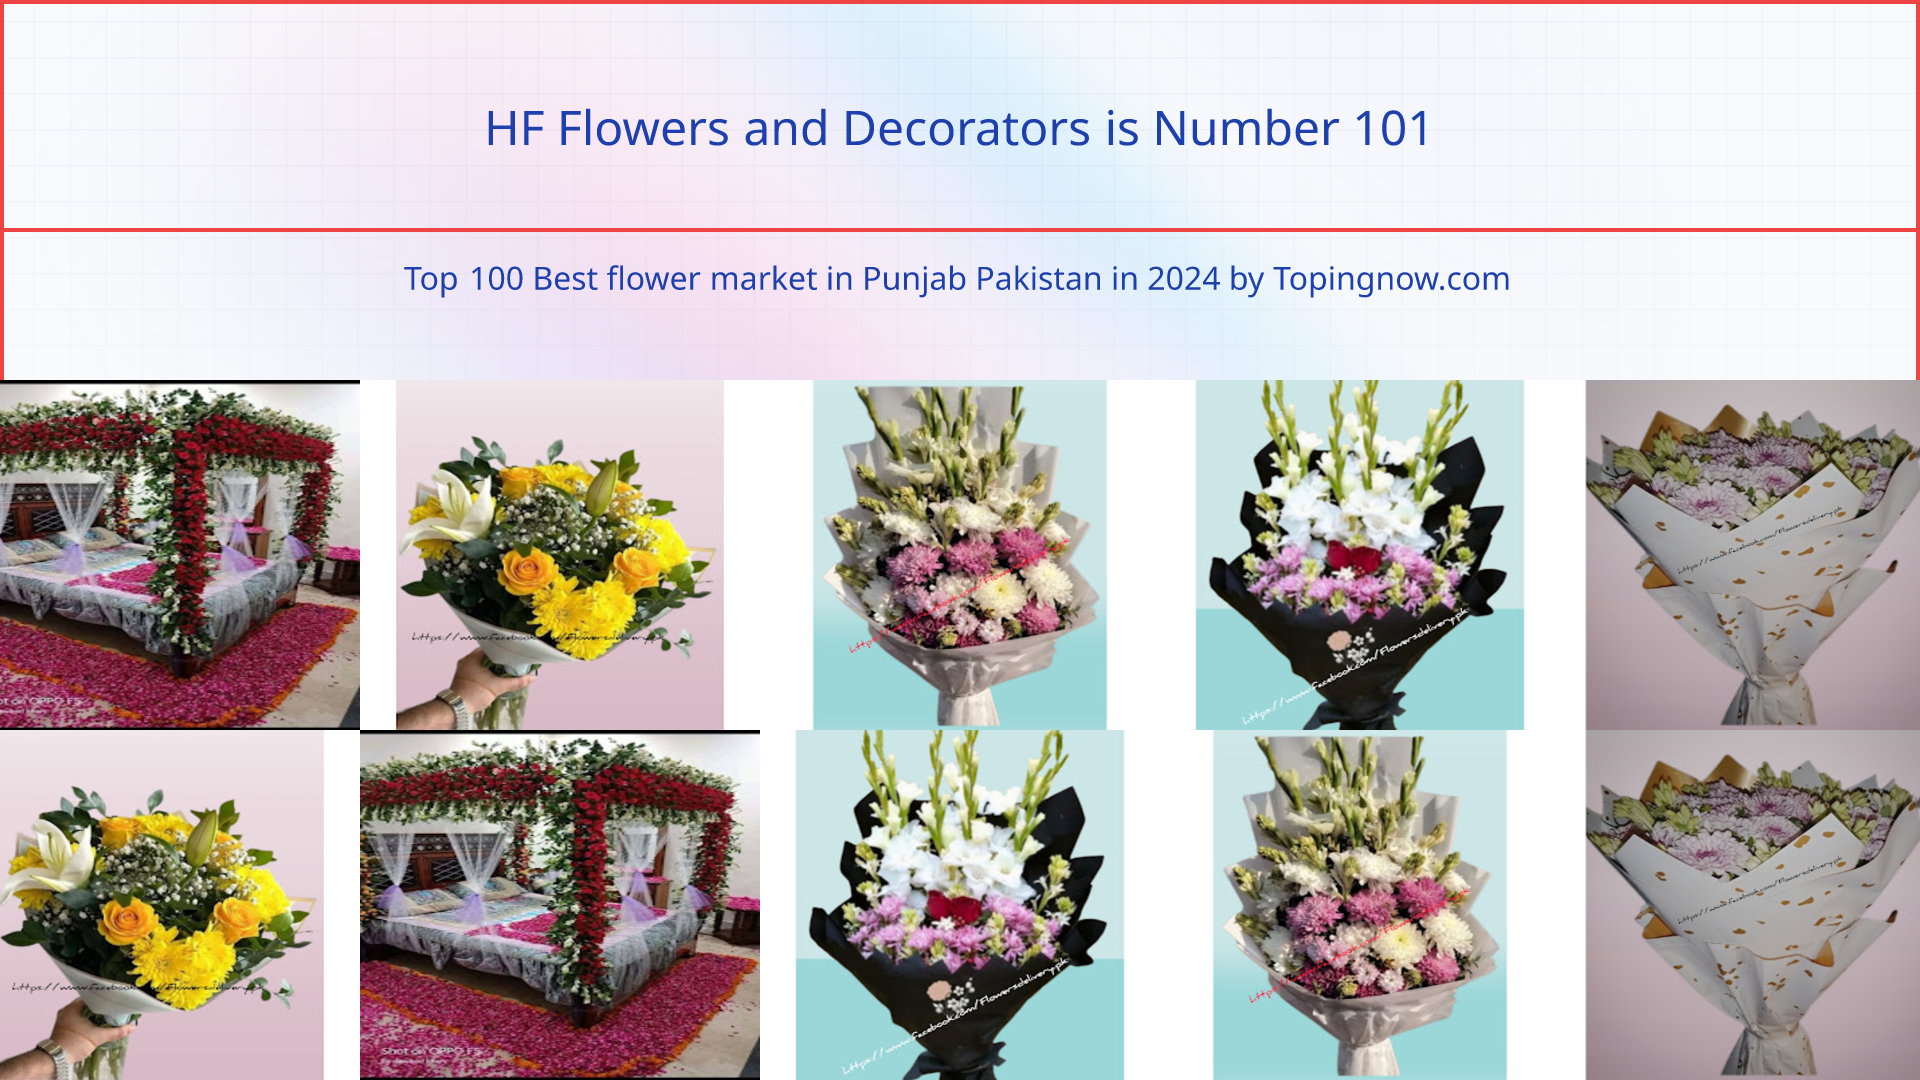 HF Flowers and Decorators: Top 100 Best flower market in Punjab Pakistan in 2024